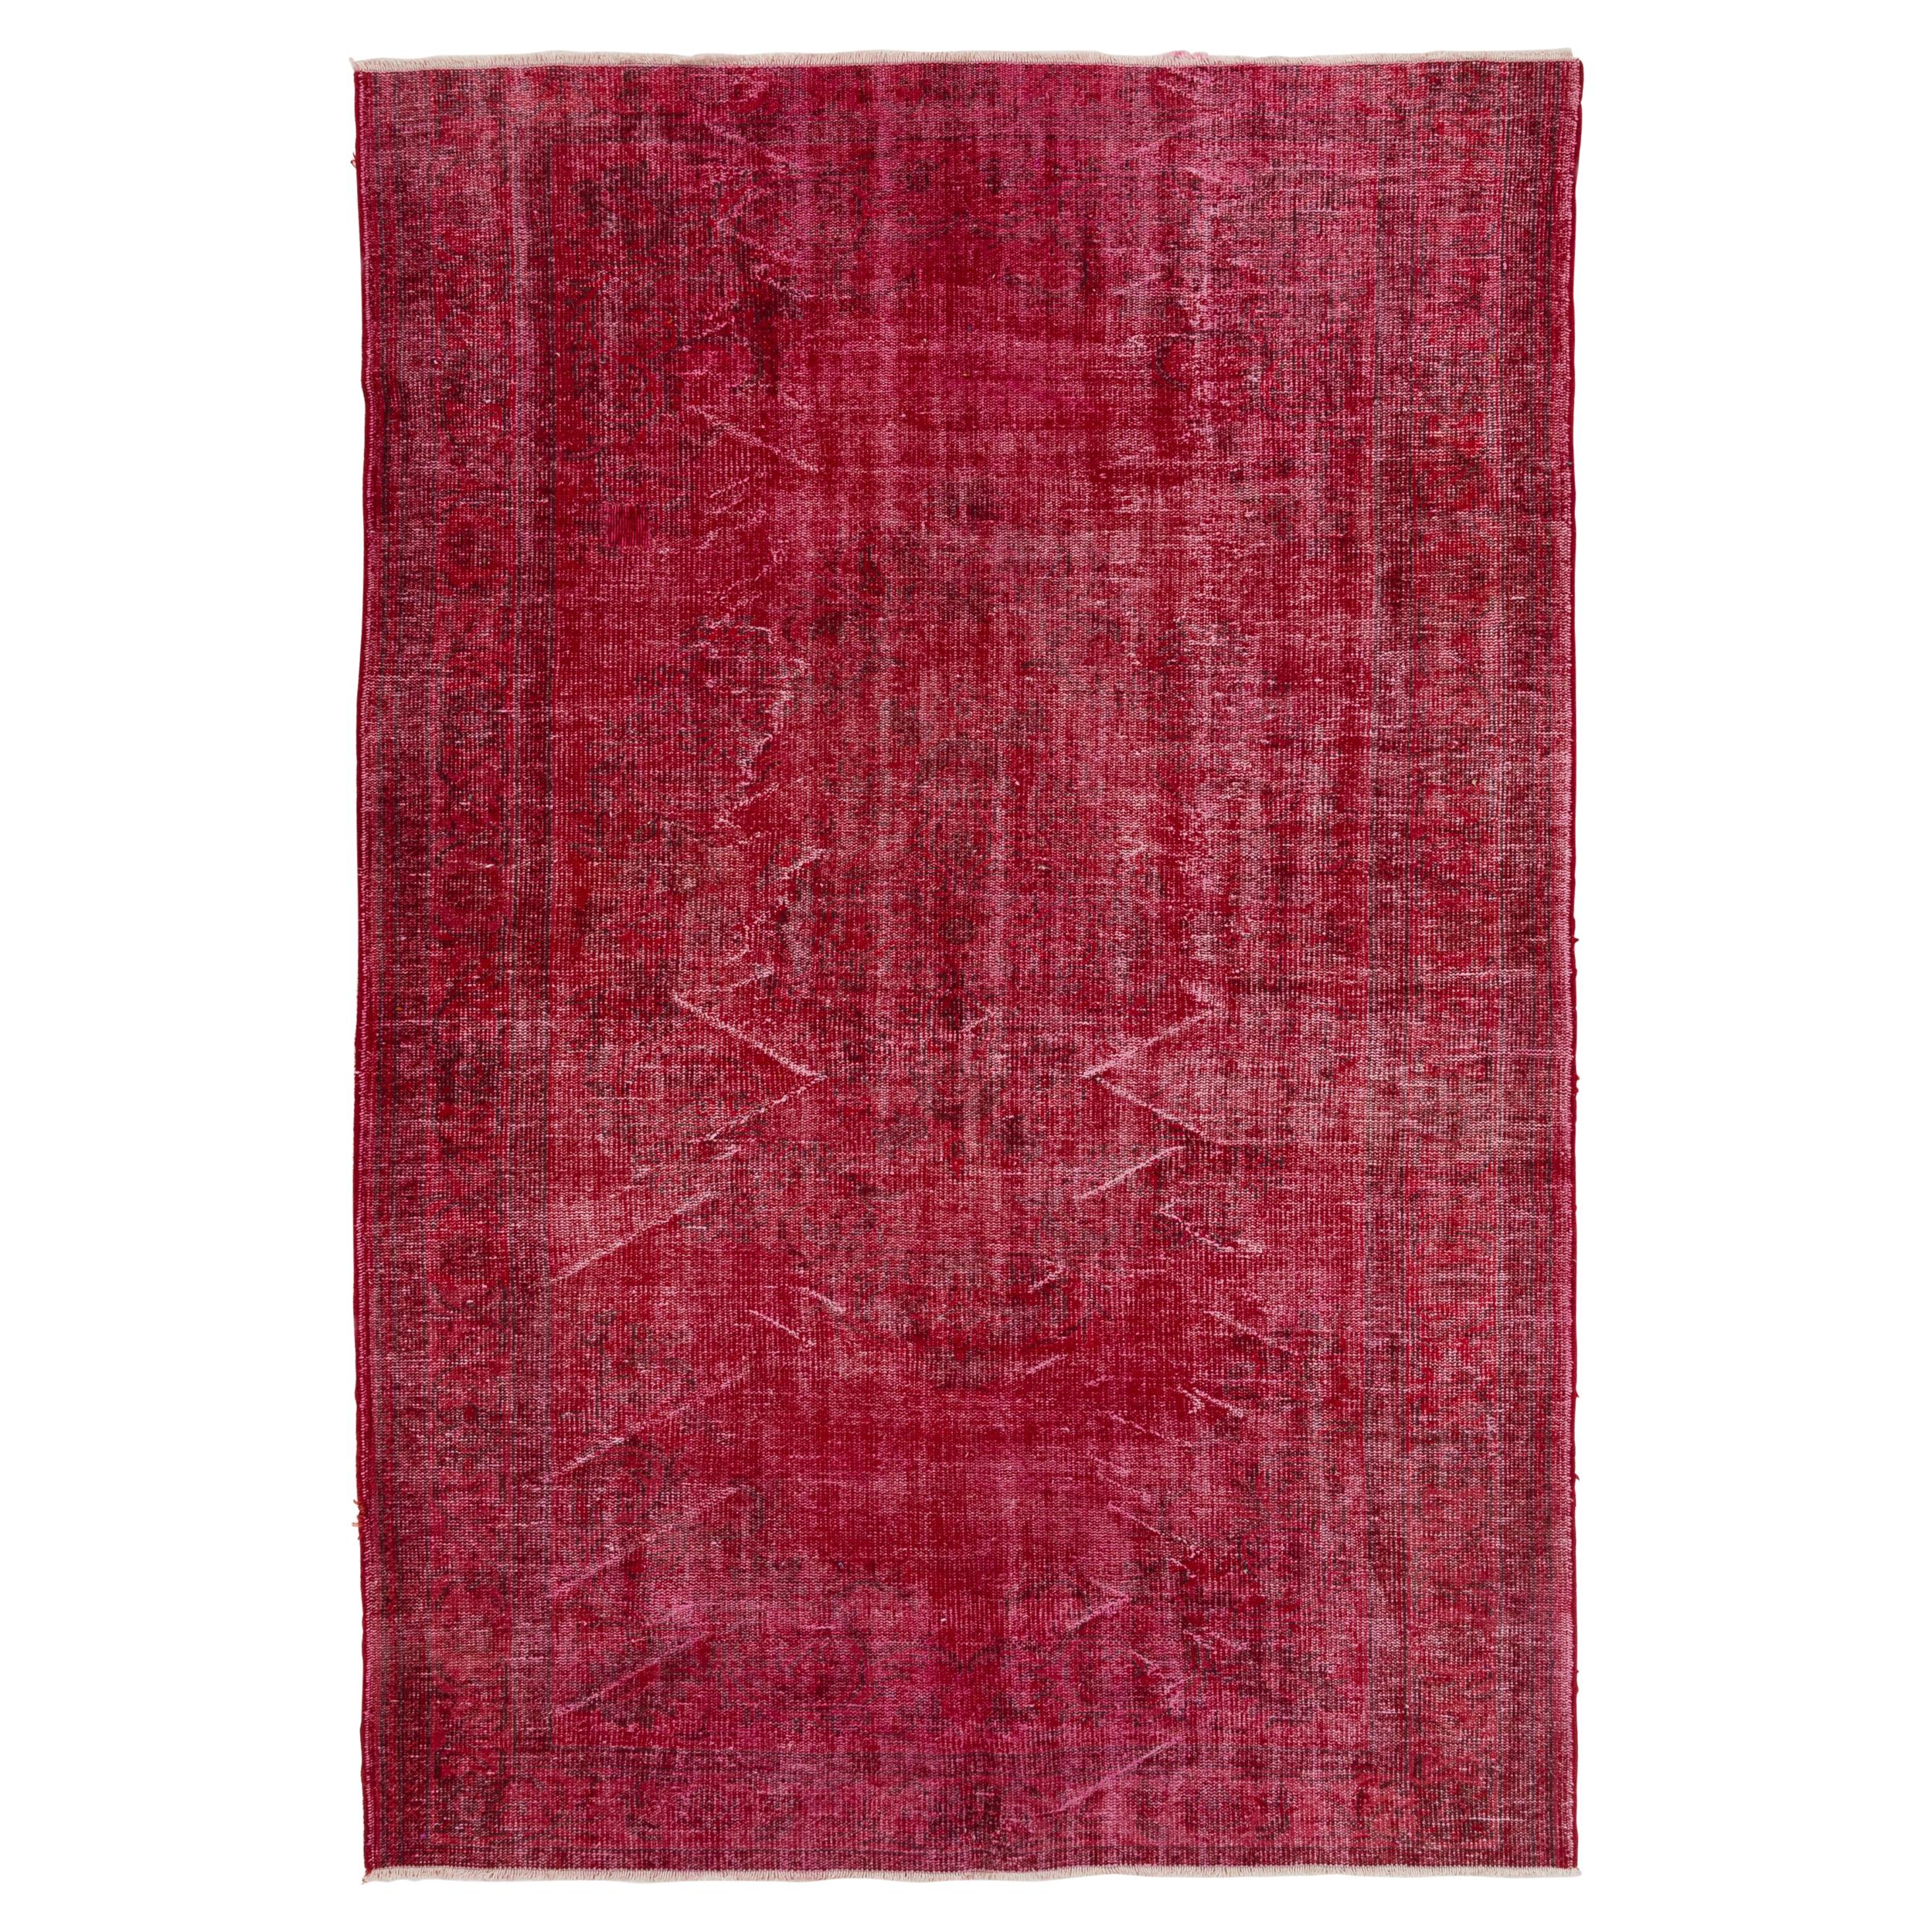 6.5x9.6 Ft Mid-Century Handmade Turkish Wool Rug in Red, Solid Modern Carpet